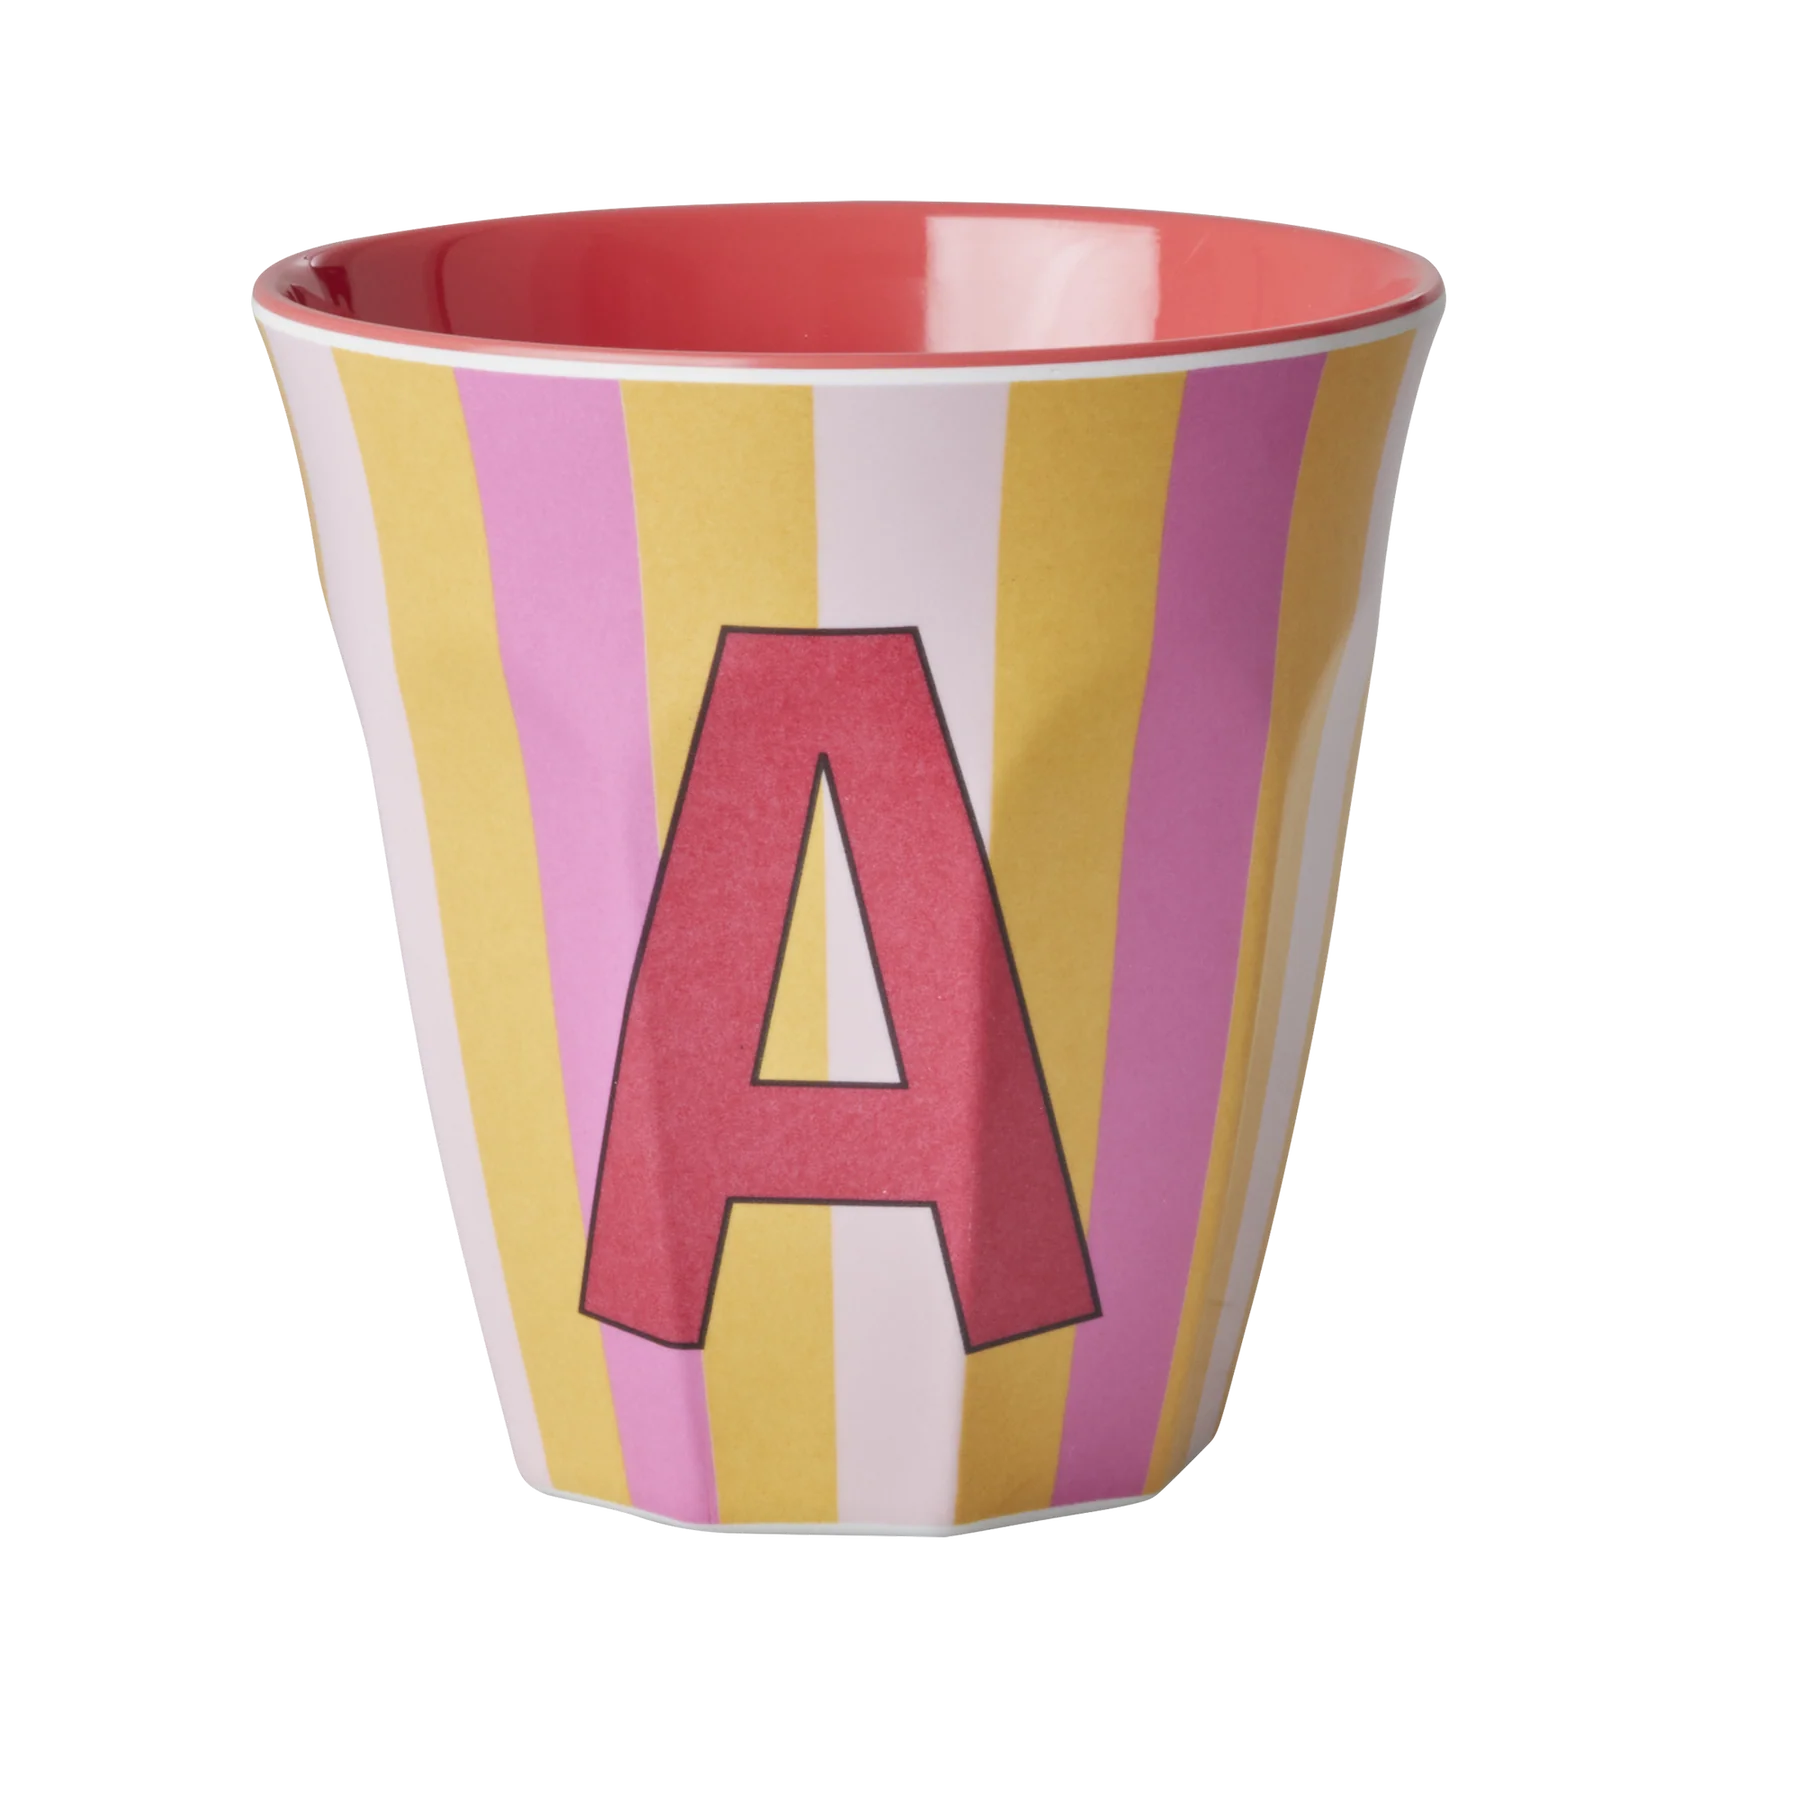 A Pink Stripe Melamine Cup - Rice DK